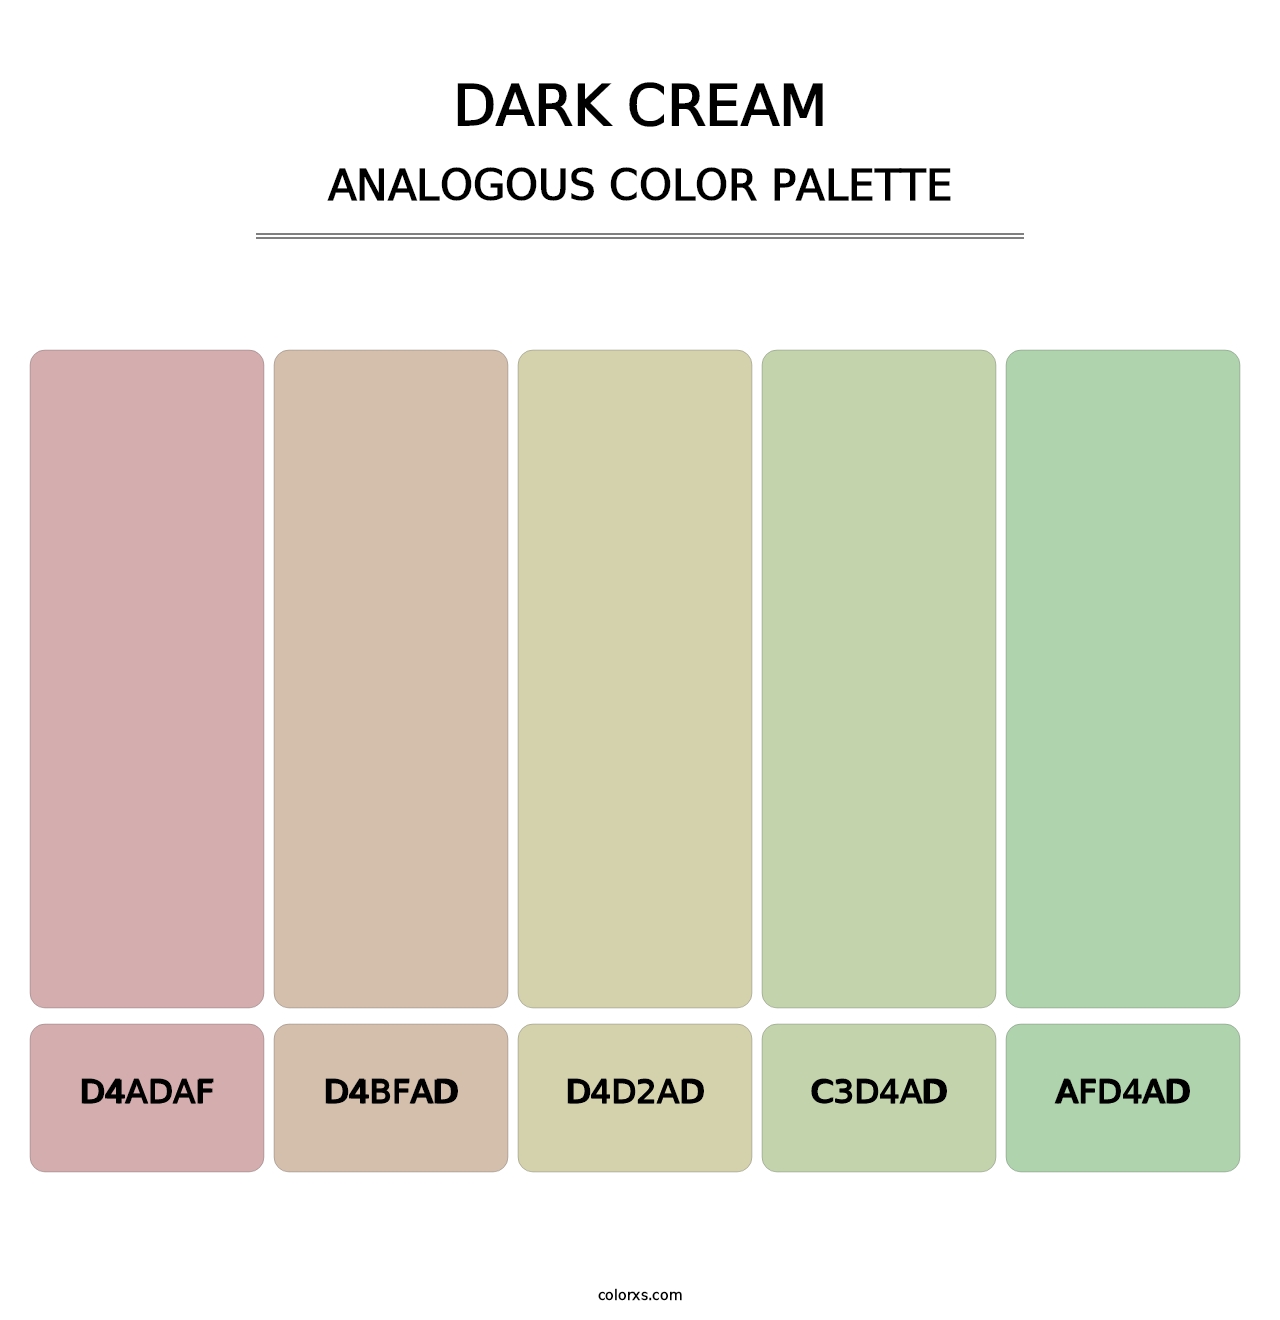 Dark Cream - Analogous Color Palette